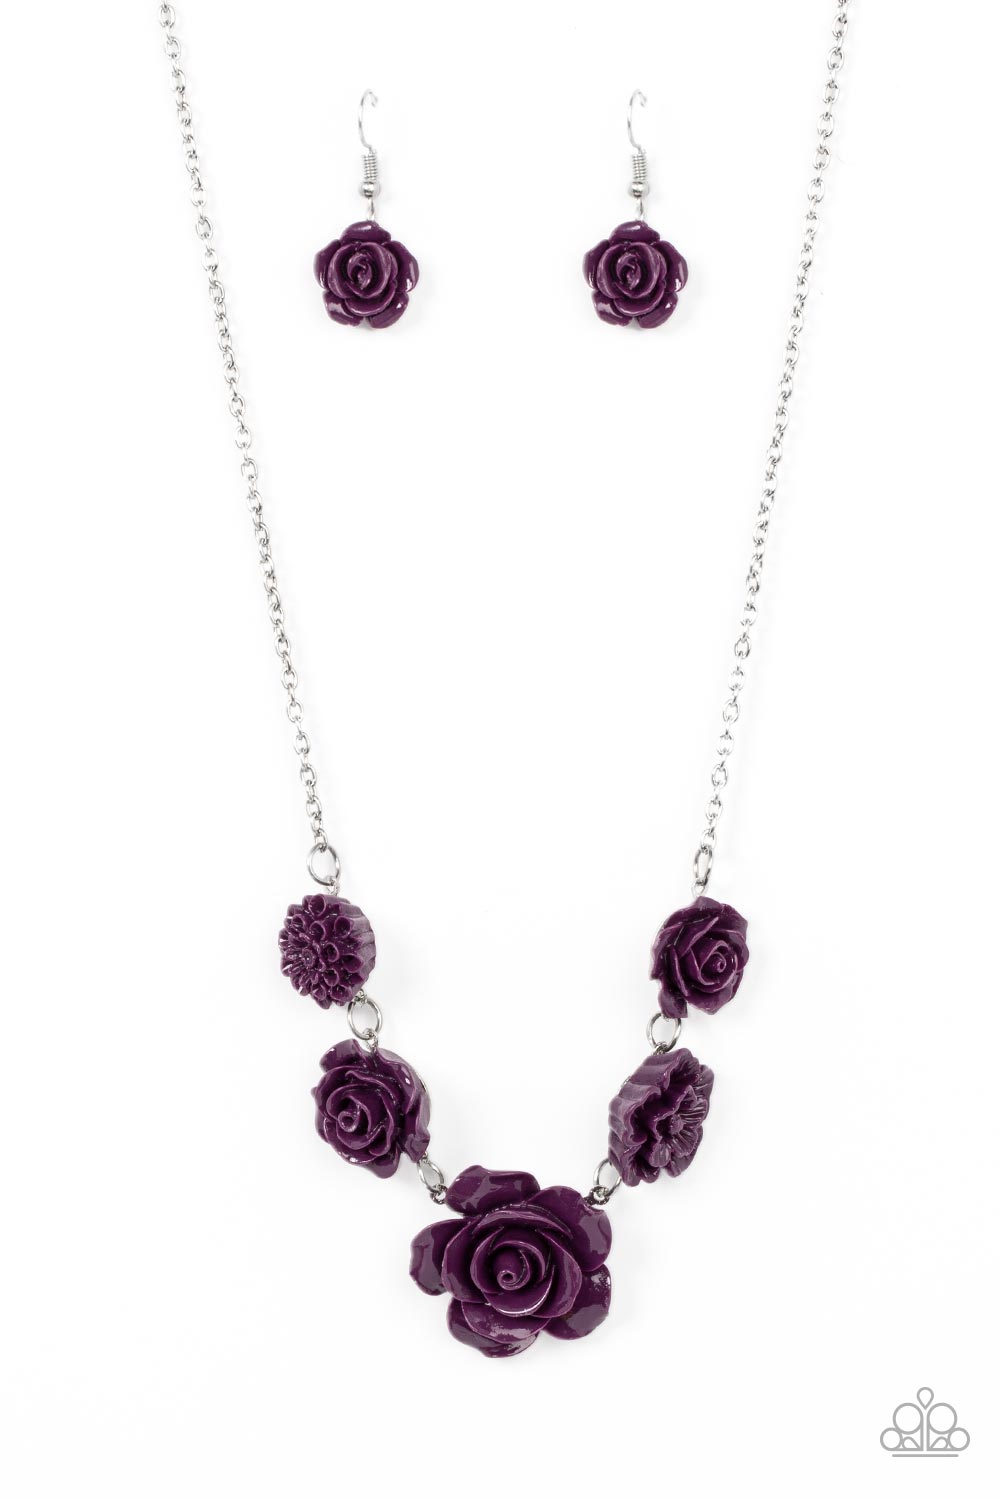 purple Rose necklace | eBay